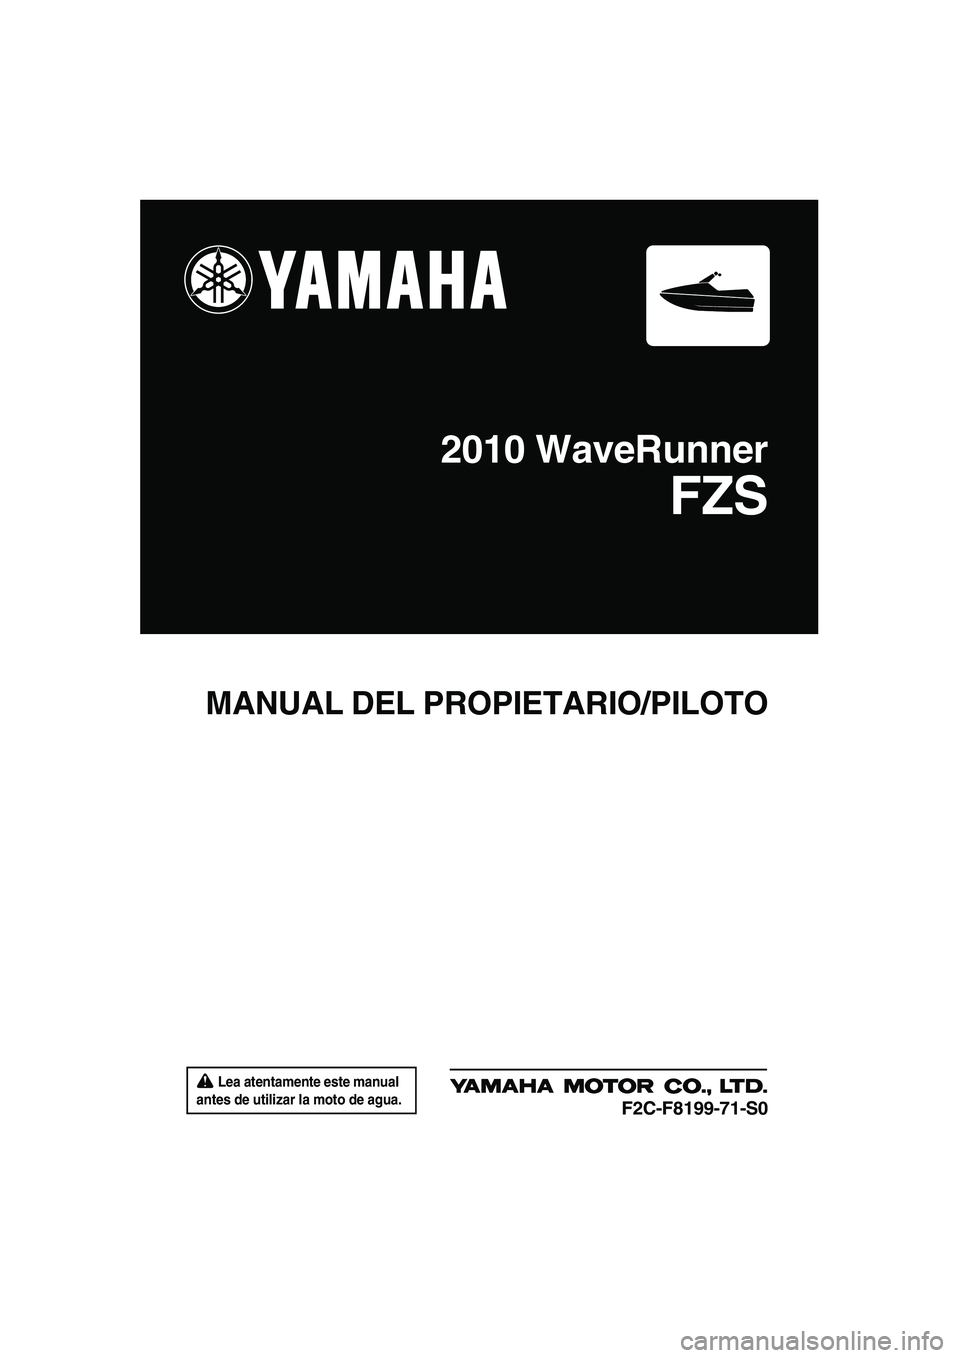 YAMAHA FZS SVHO 2010  Manuale de Empleo (in Spanish)  Lea atentamente este manual 
antes de utilizar la moto de agua.
MANUAL DEL PROPIETARIO/PILOTO
2010 WaveRunner
FZS
F2C-F8199-71-S0
UF2C71S0.book  Page 1  Tuesday, July 14, 2009  11:41 AM 